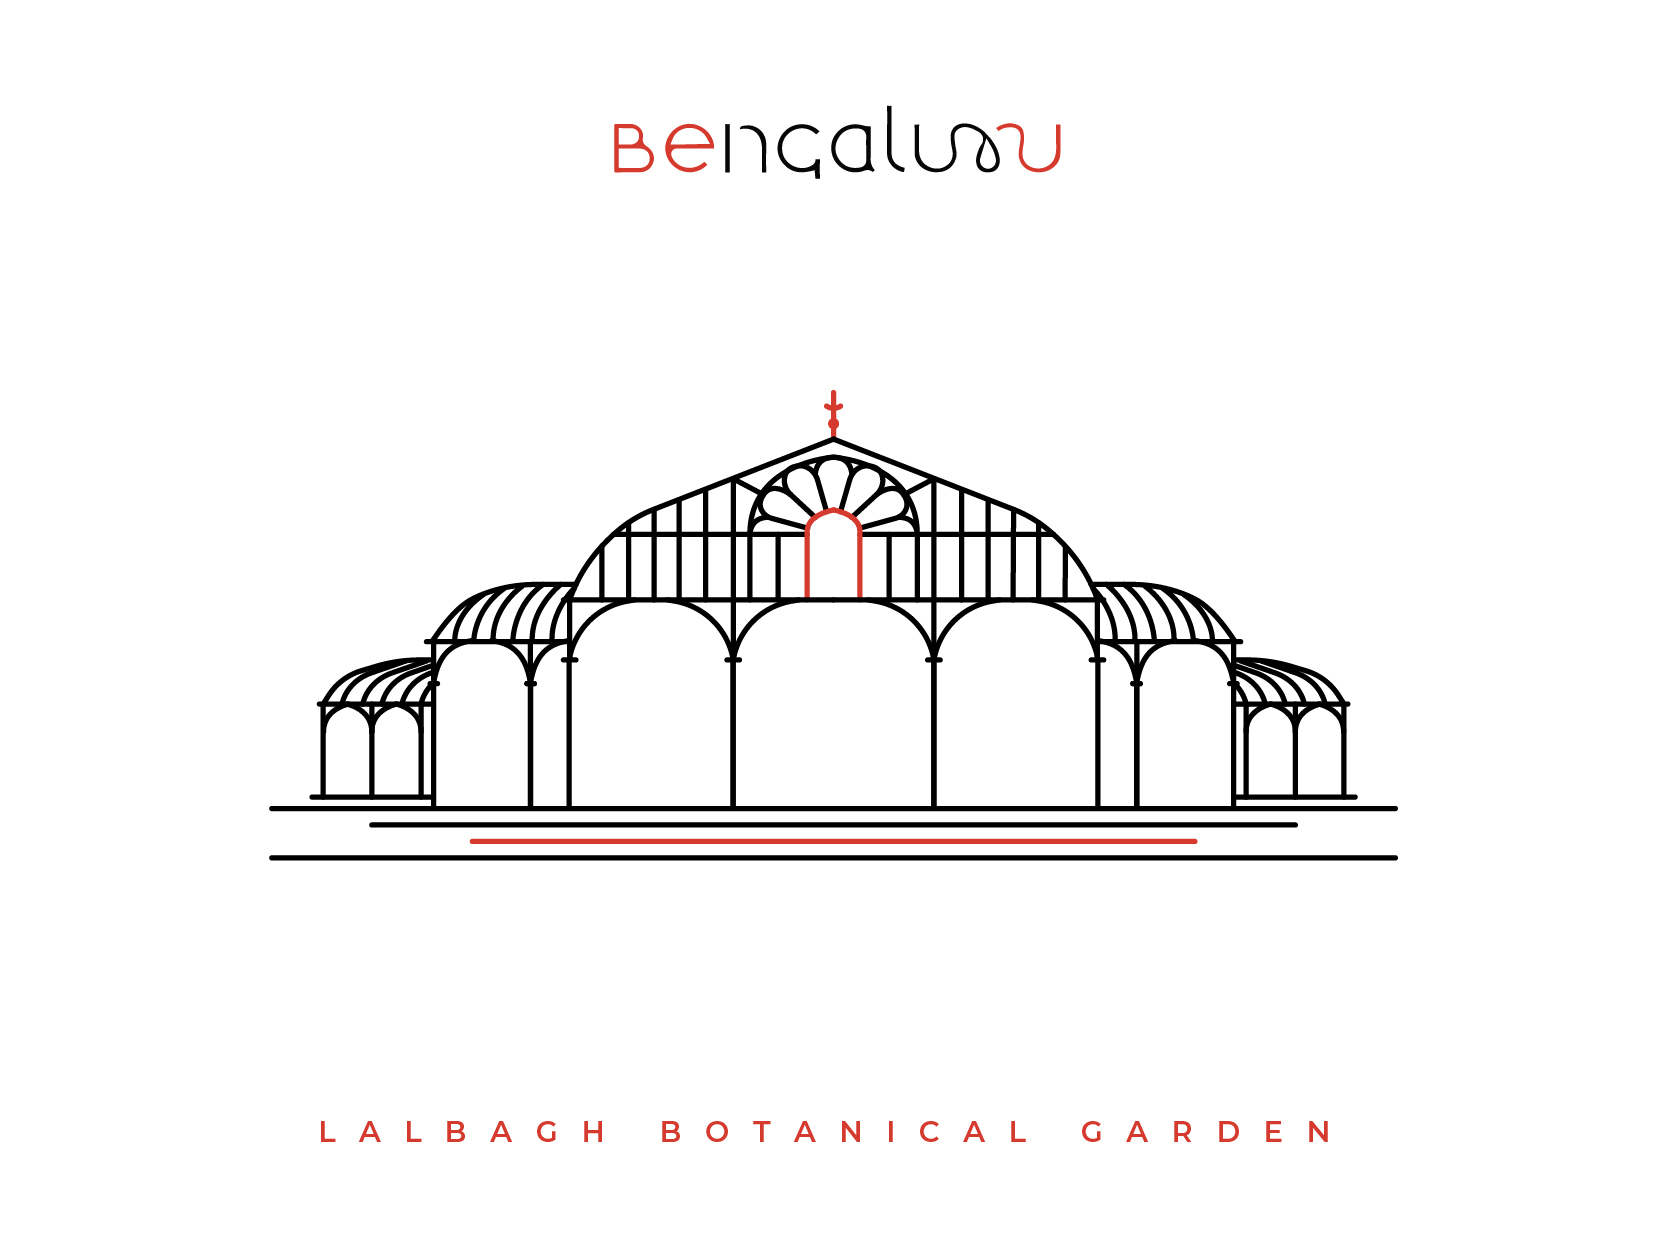 Lalbagh Botanical Garden By Rakshith N On Dribbble